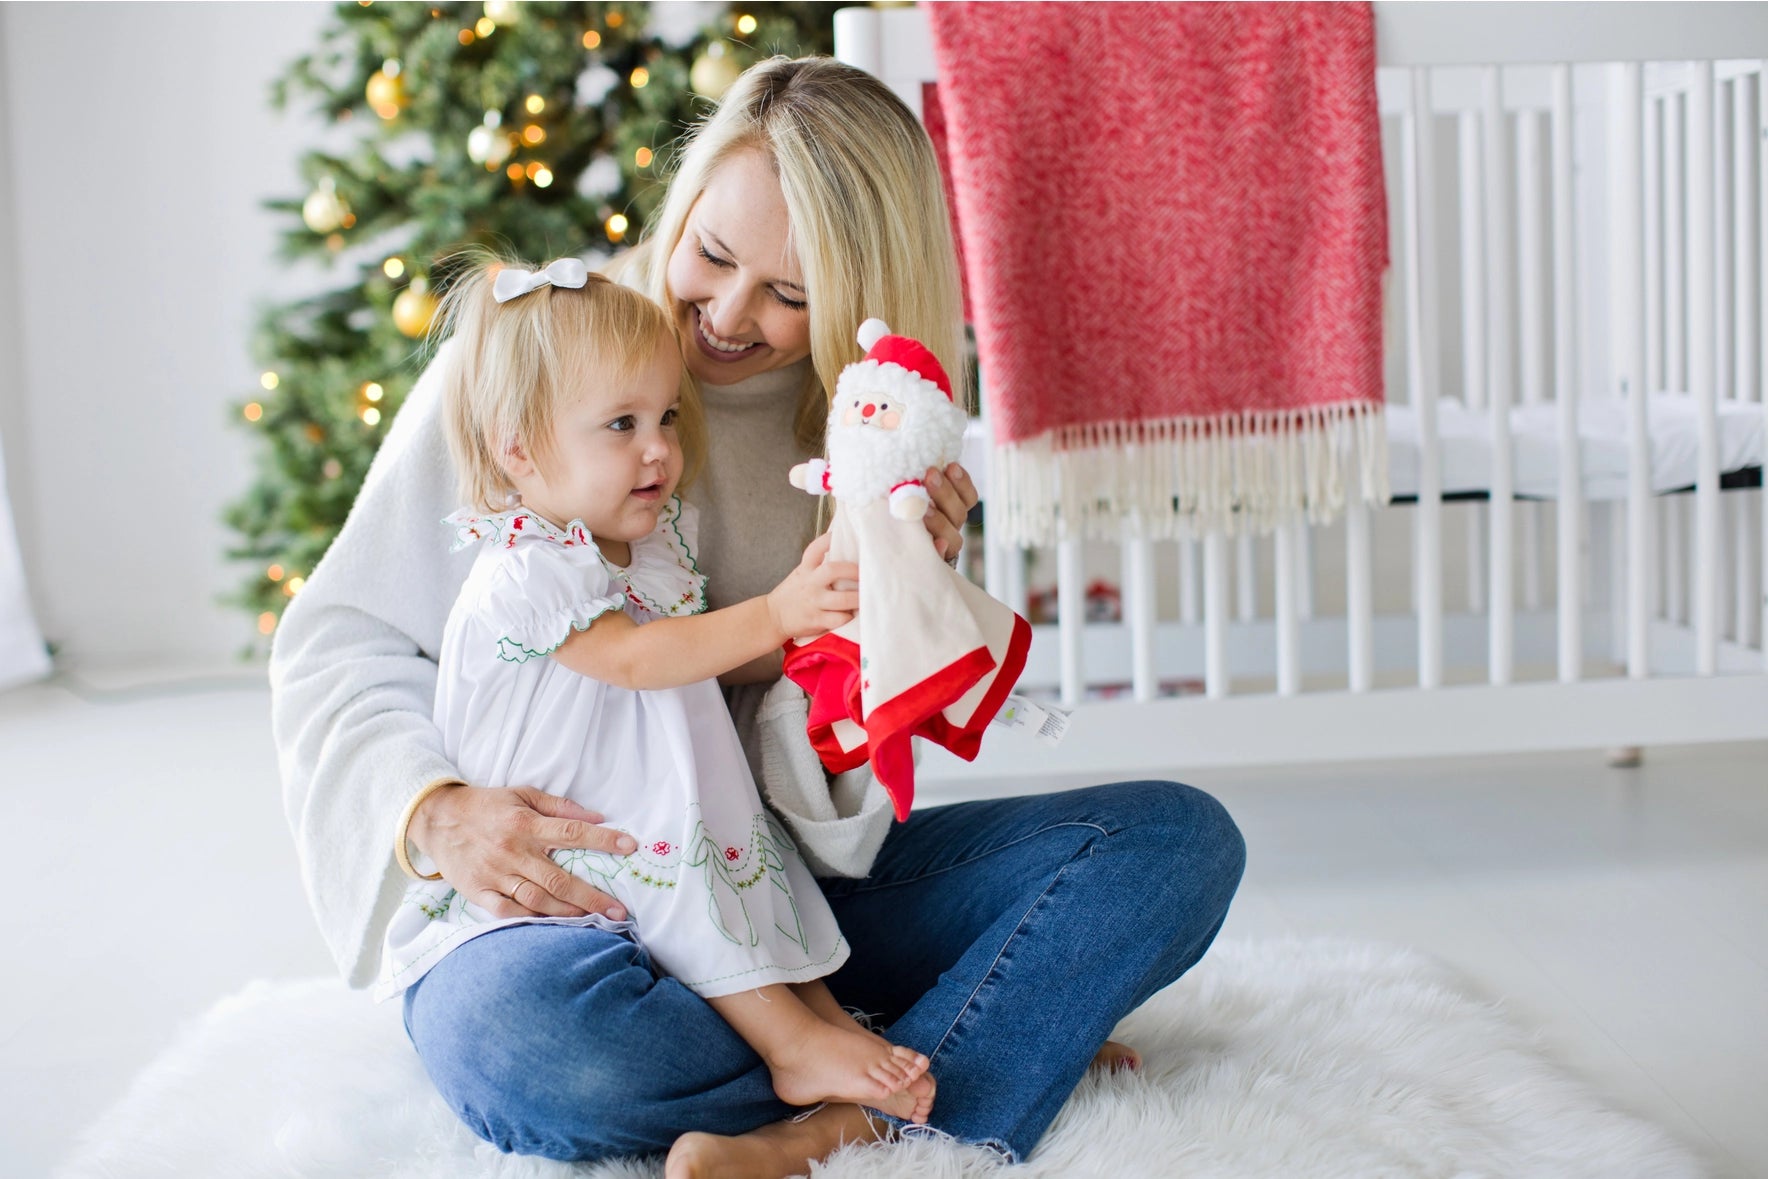 Baby's First Christmas Santa Snuggle Blanket  - Doodlebug's Children's Boutique